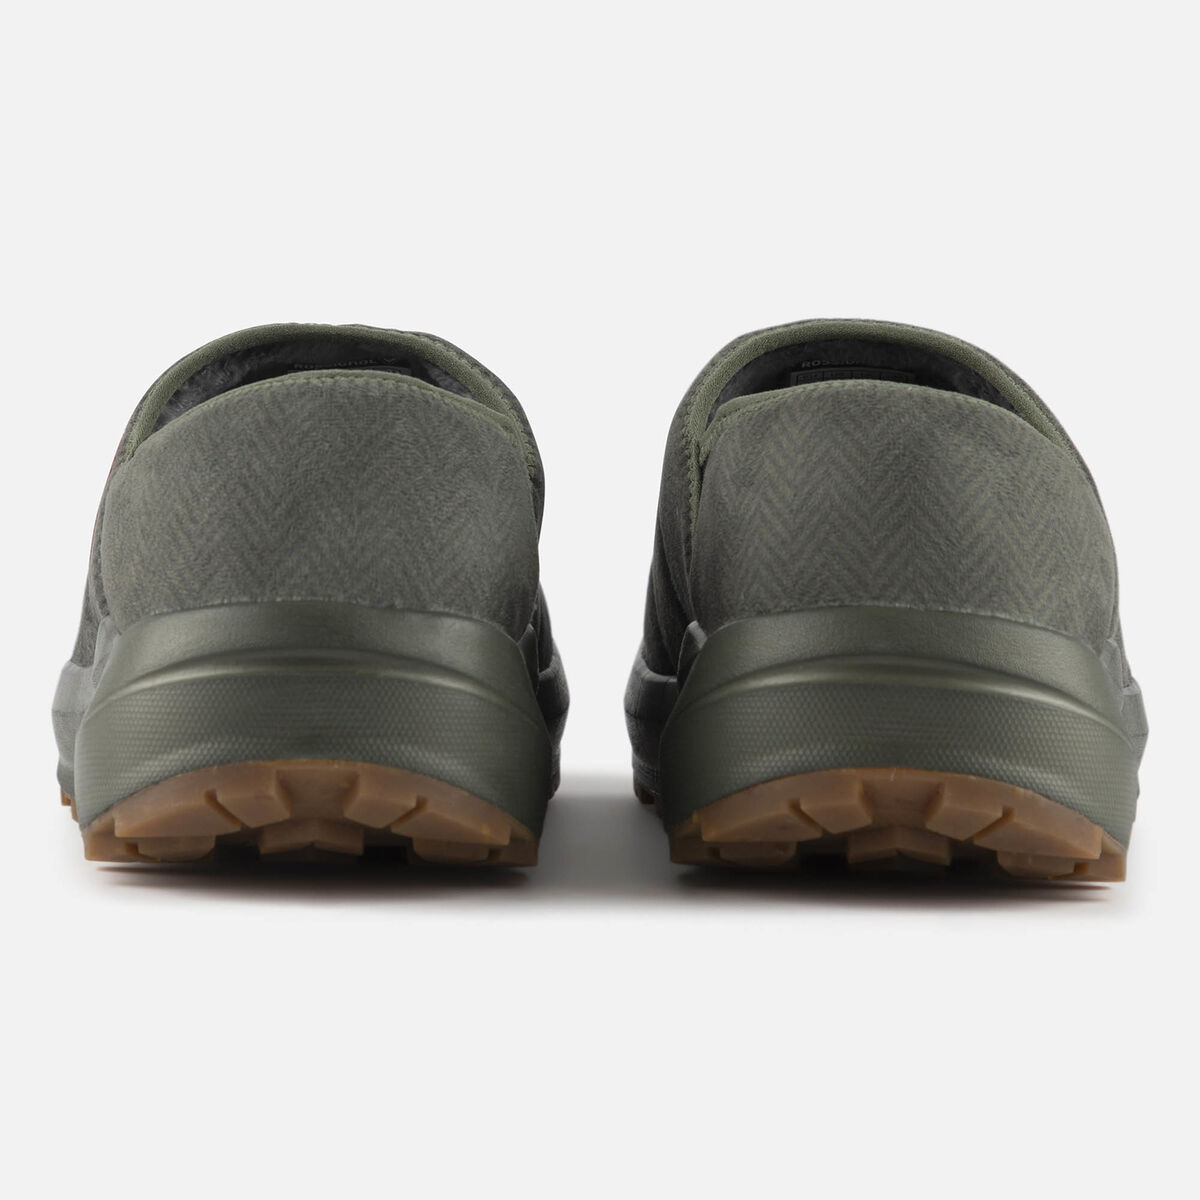 Pantofole invernali Unisex Chalet verde kaki